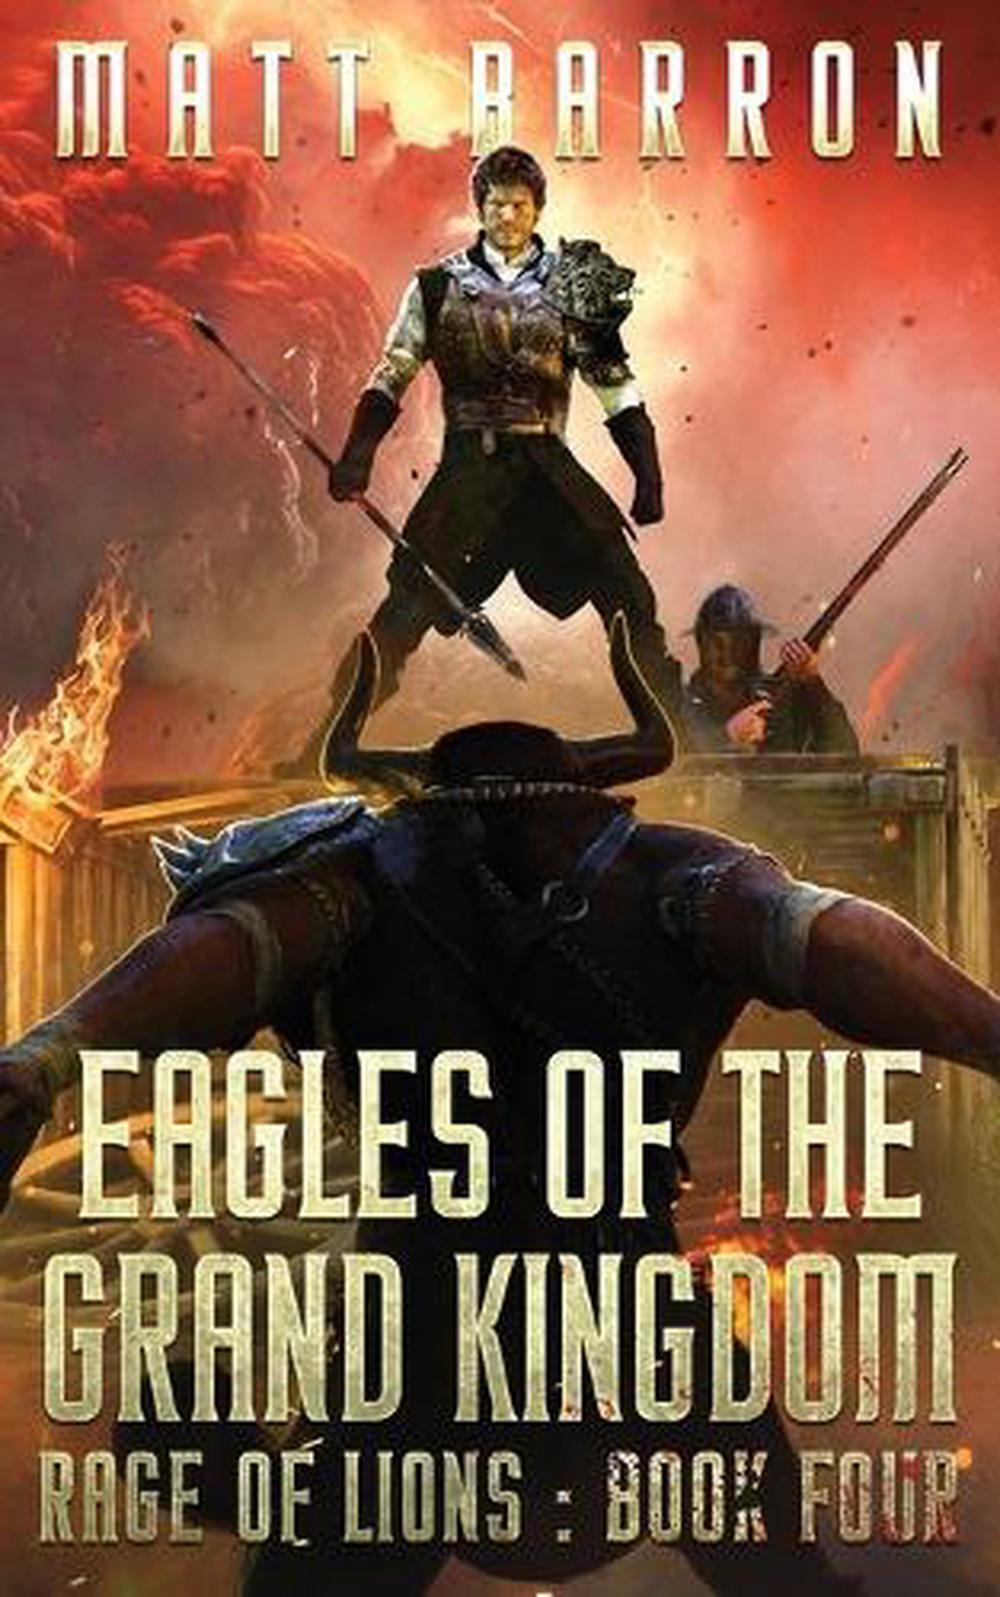 Eagles of the Grand Kingdom by Matt Barron Paperback Book